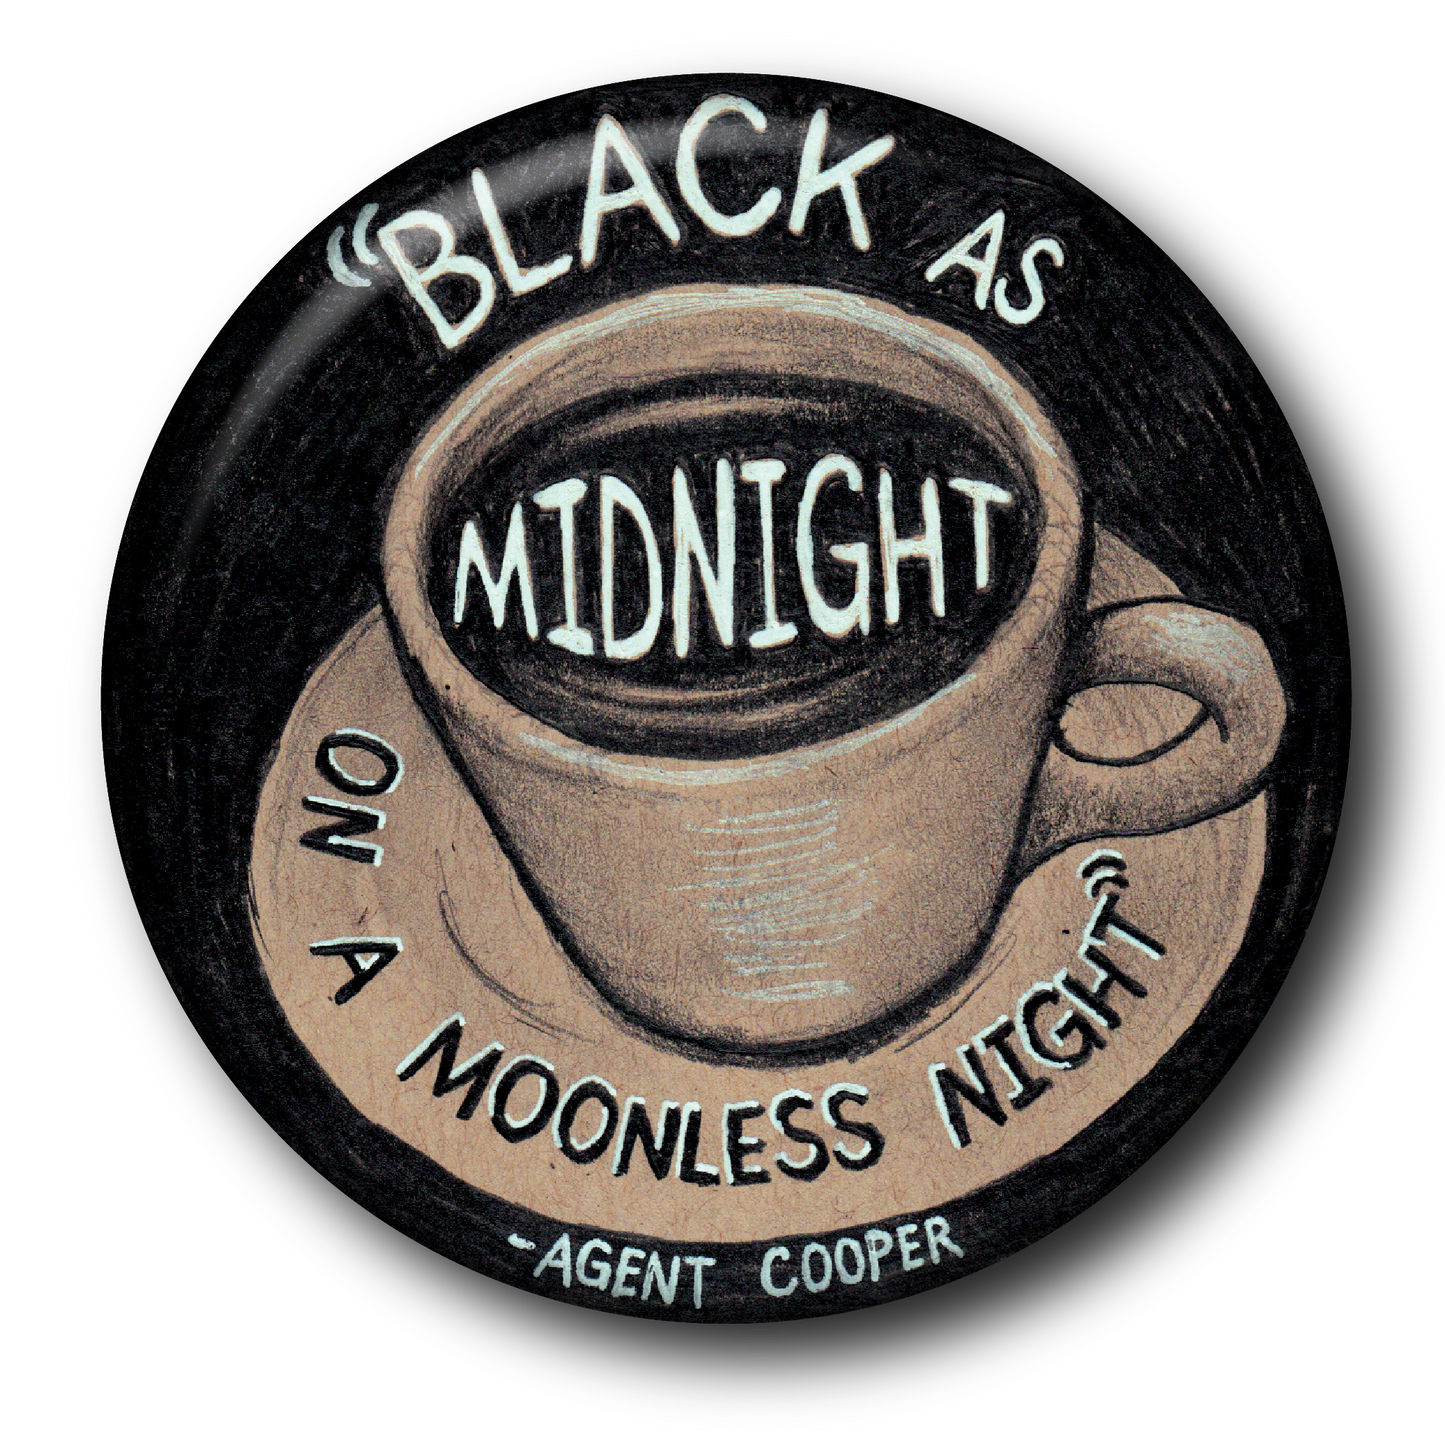 Black as Midnight on a Moonless night - Twin Peaks